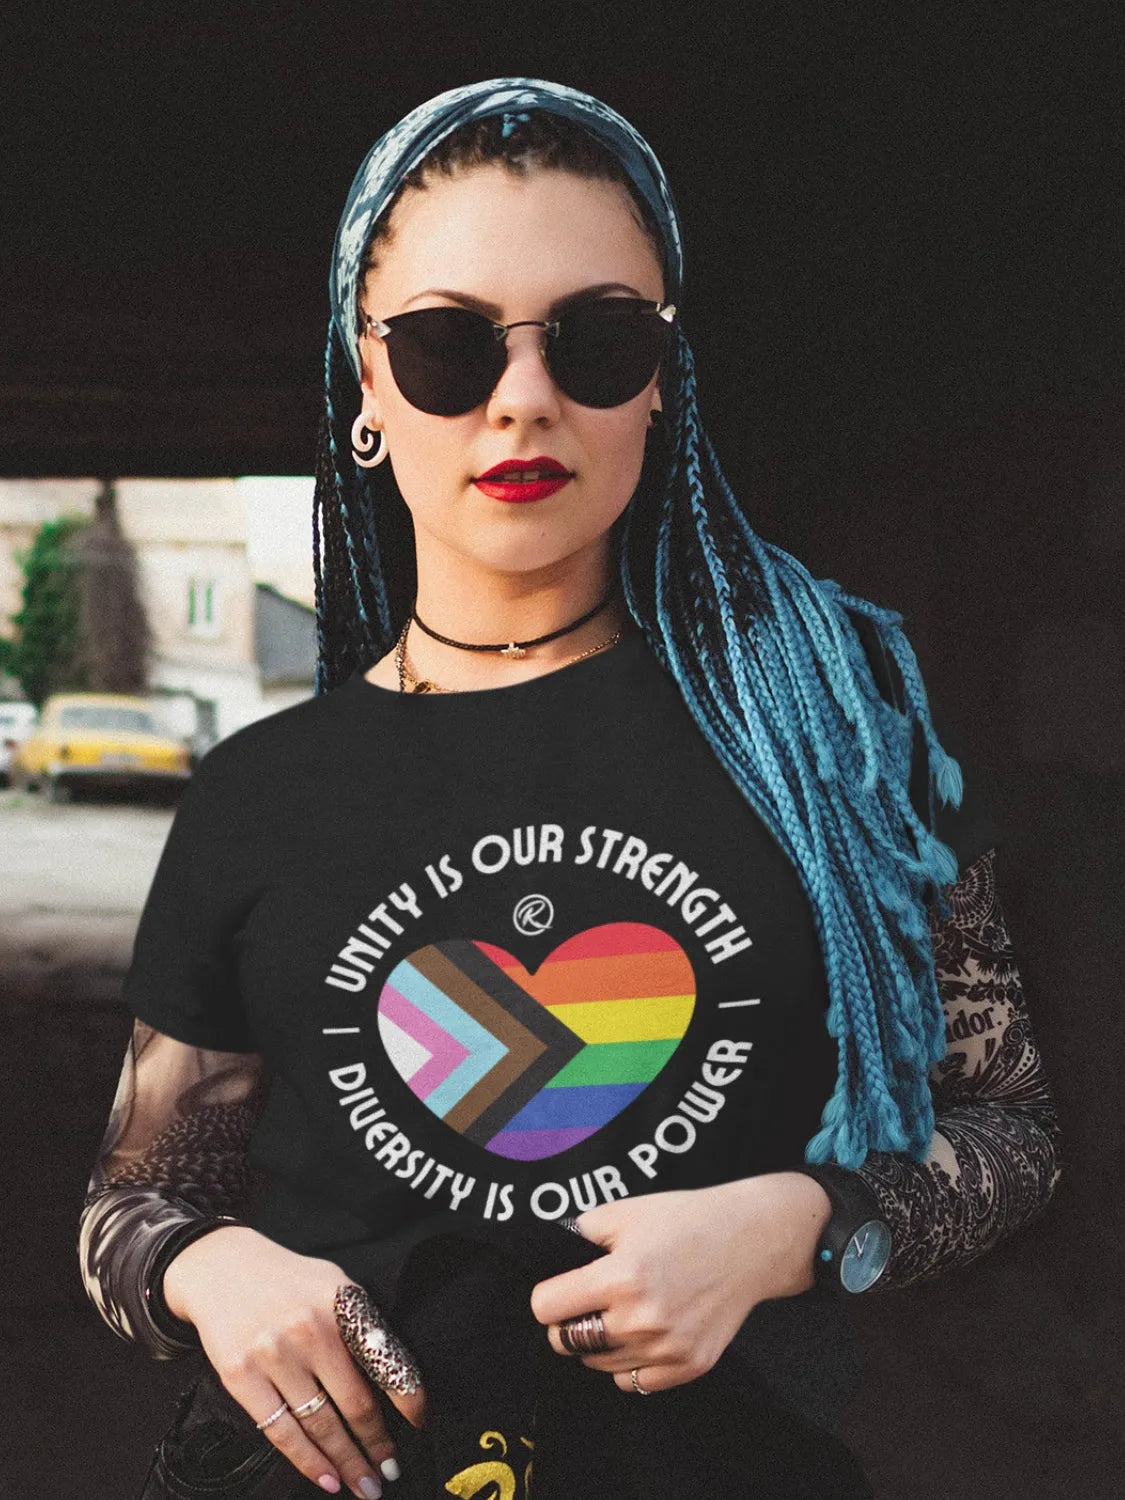 Unity-Strength-Diversity-Power T-shirt